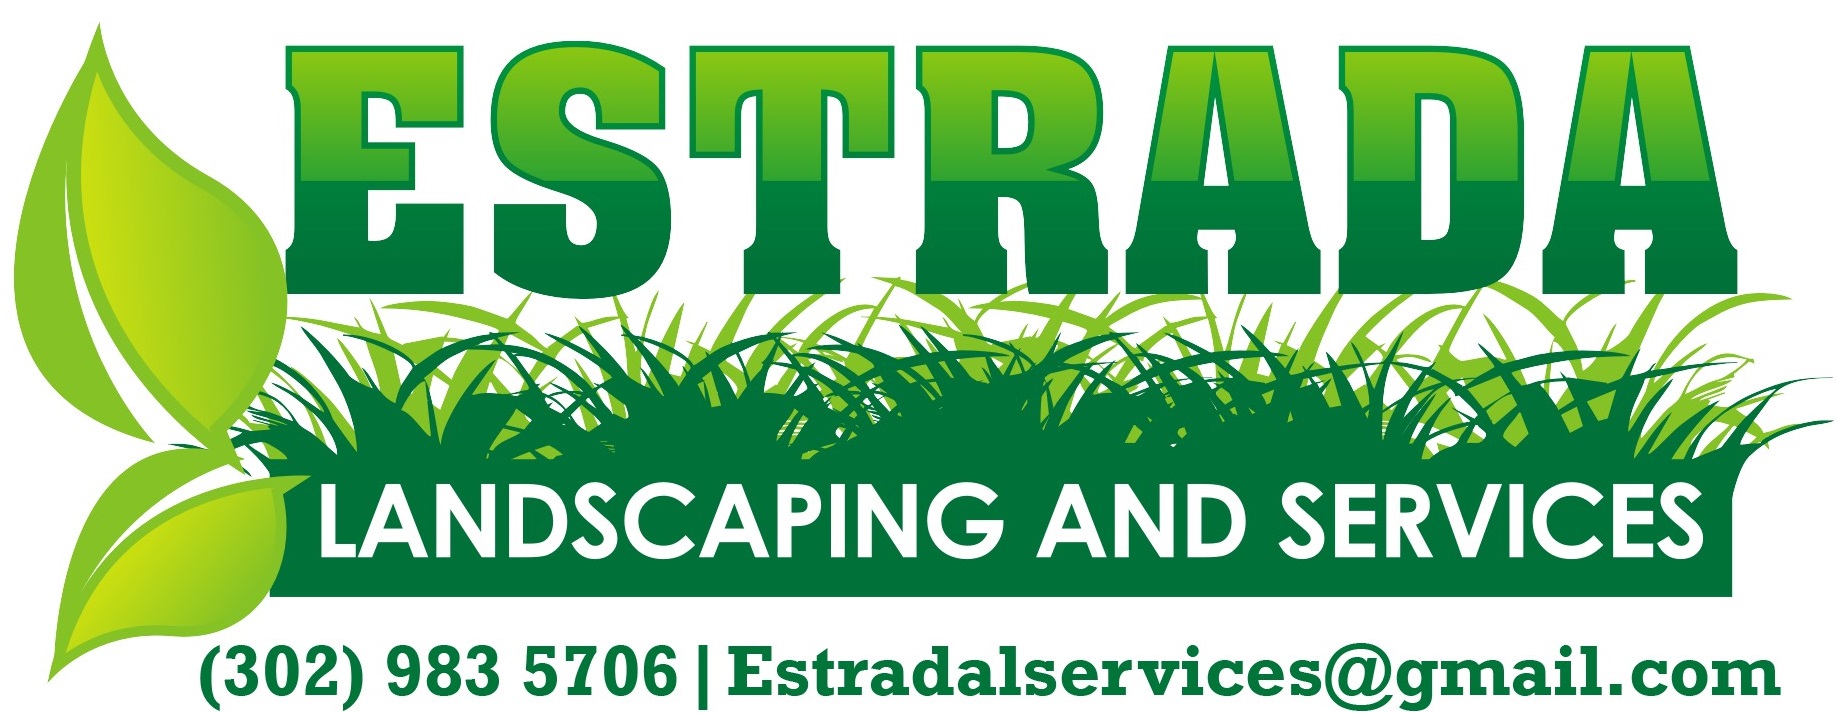 Estrada Landscaping and Services Logo